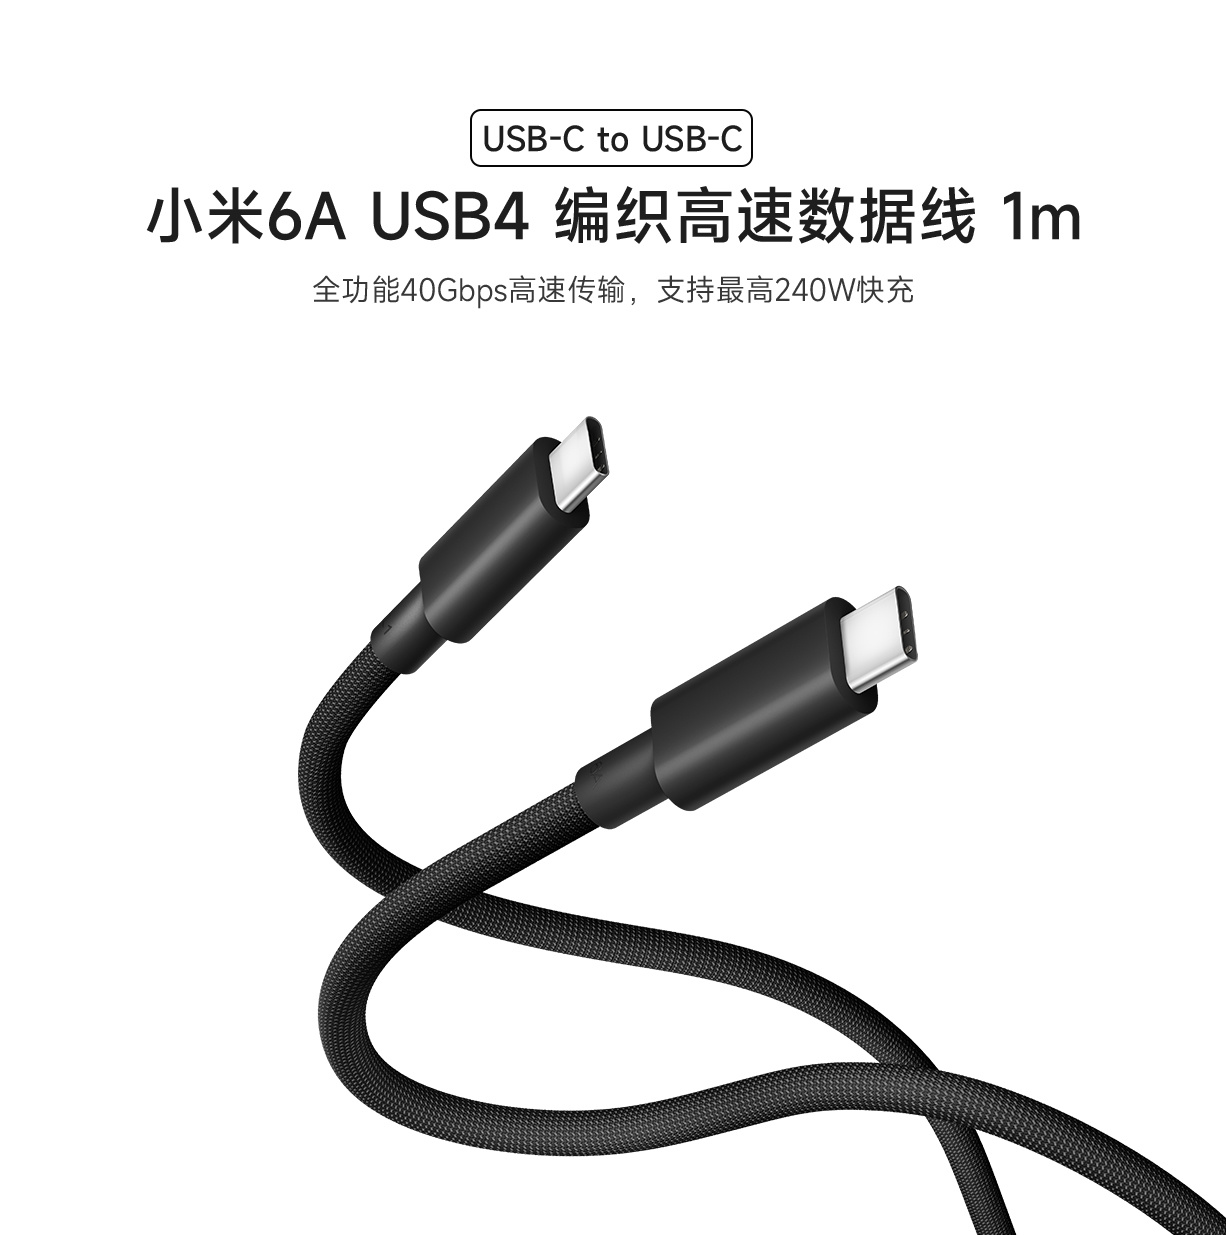 С 6A USB4 ֯У1 ׳ȡ֧ 240W 䣬99 Ԫ